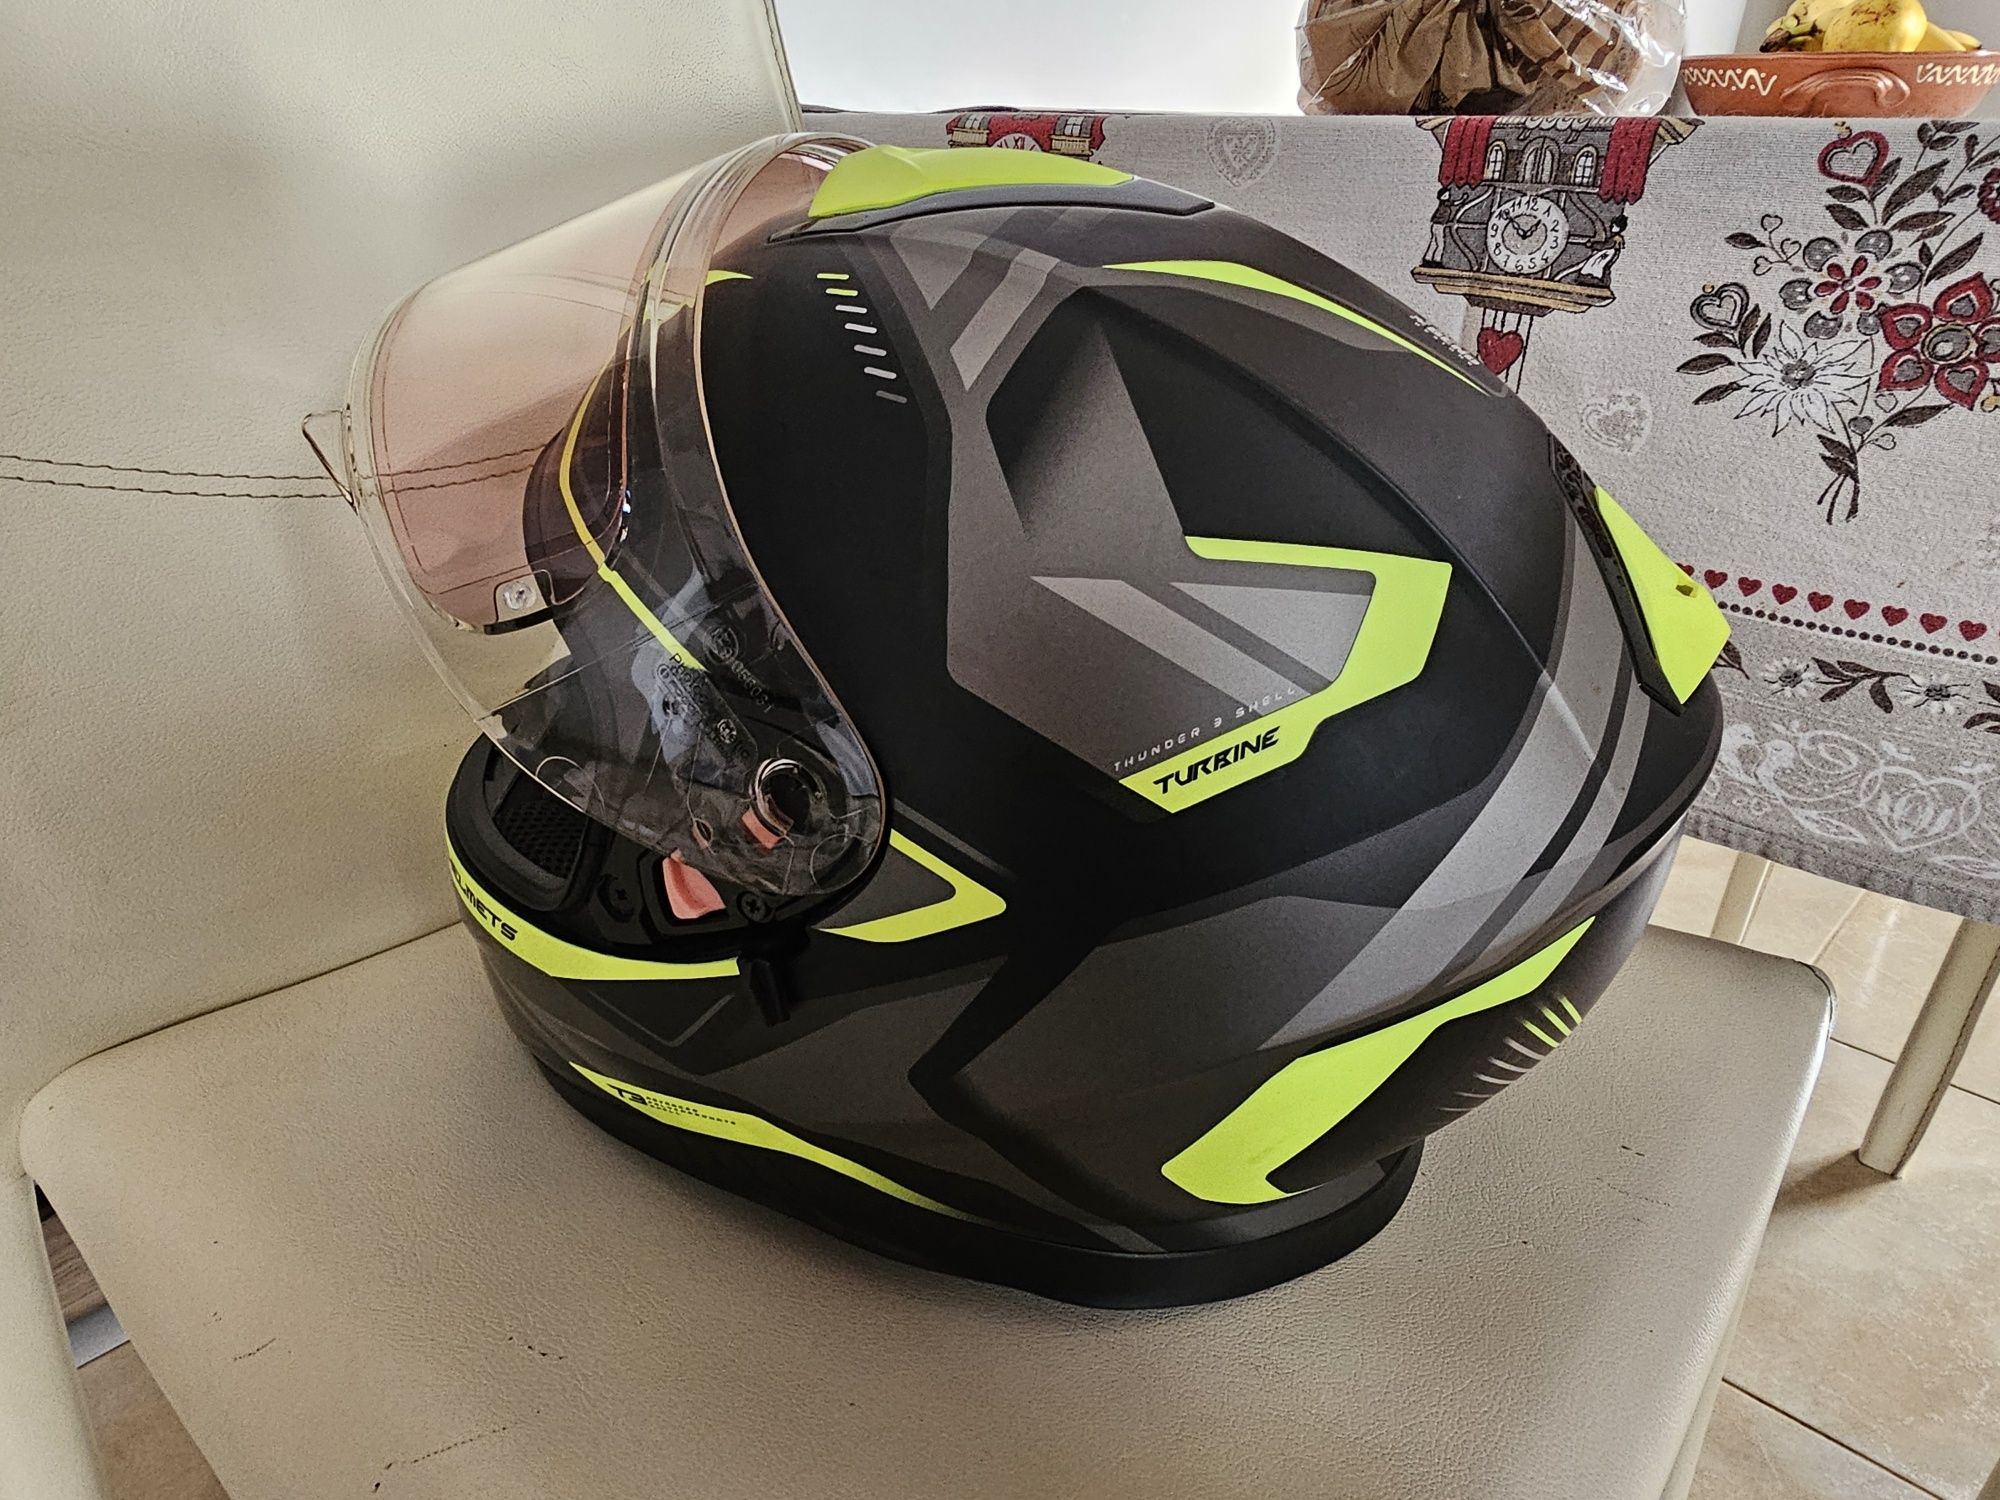 Mt helmet Thunder 3SV marimea L